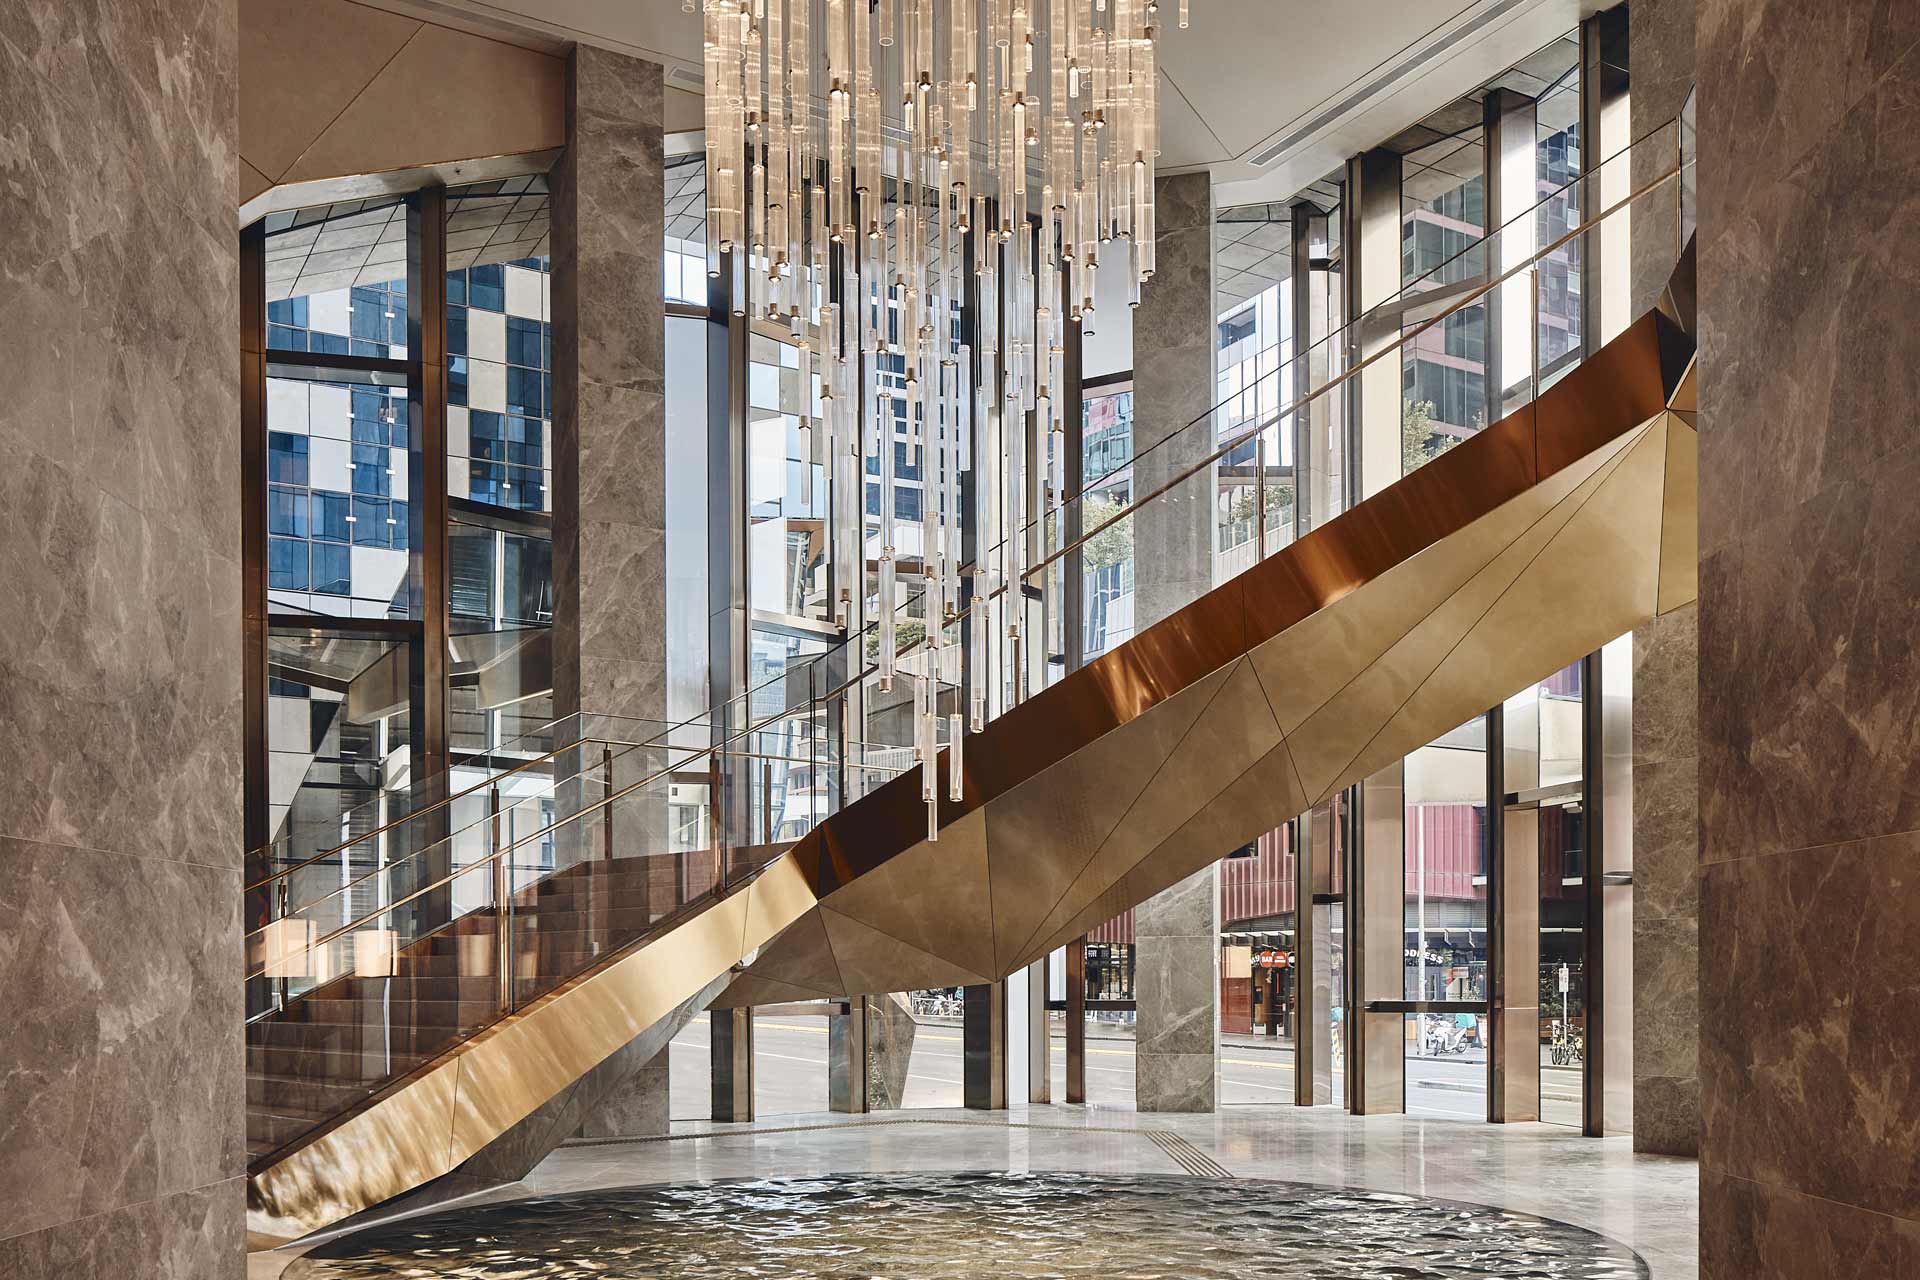 Bar Studio completes design of The Ritz-Carlton, Melbourne - Sleeper